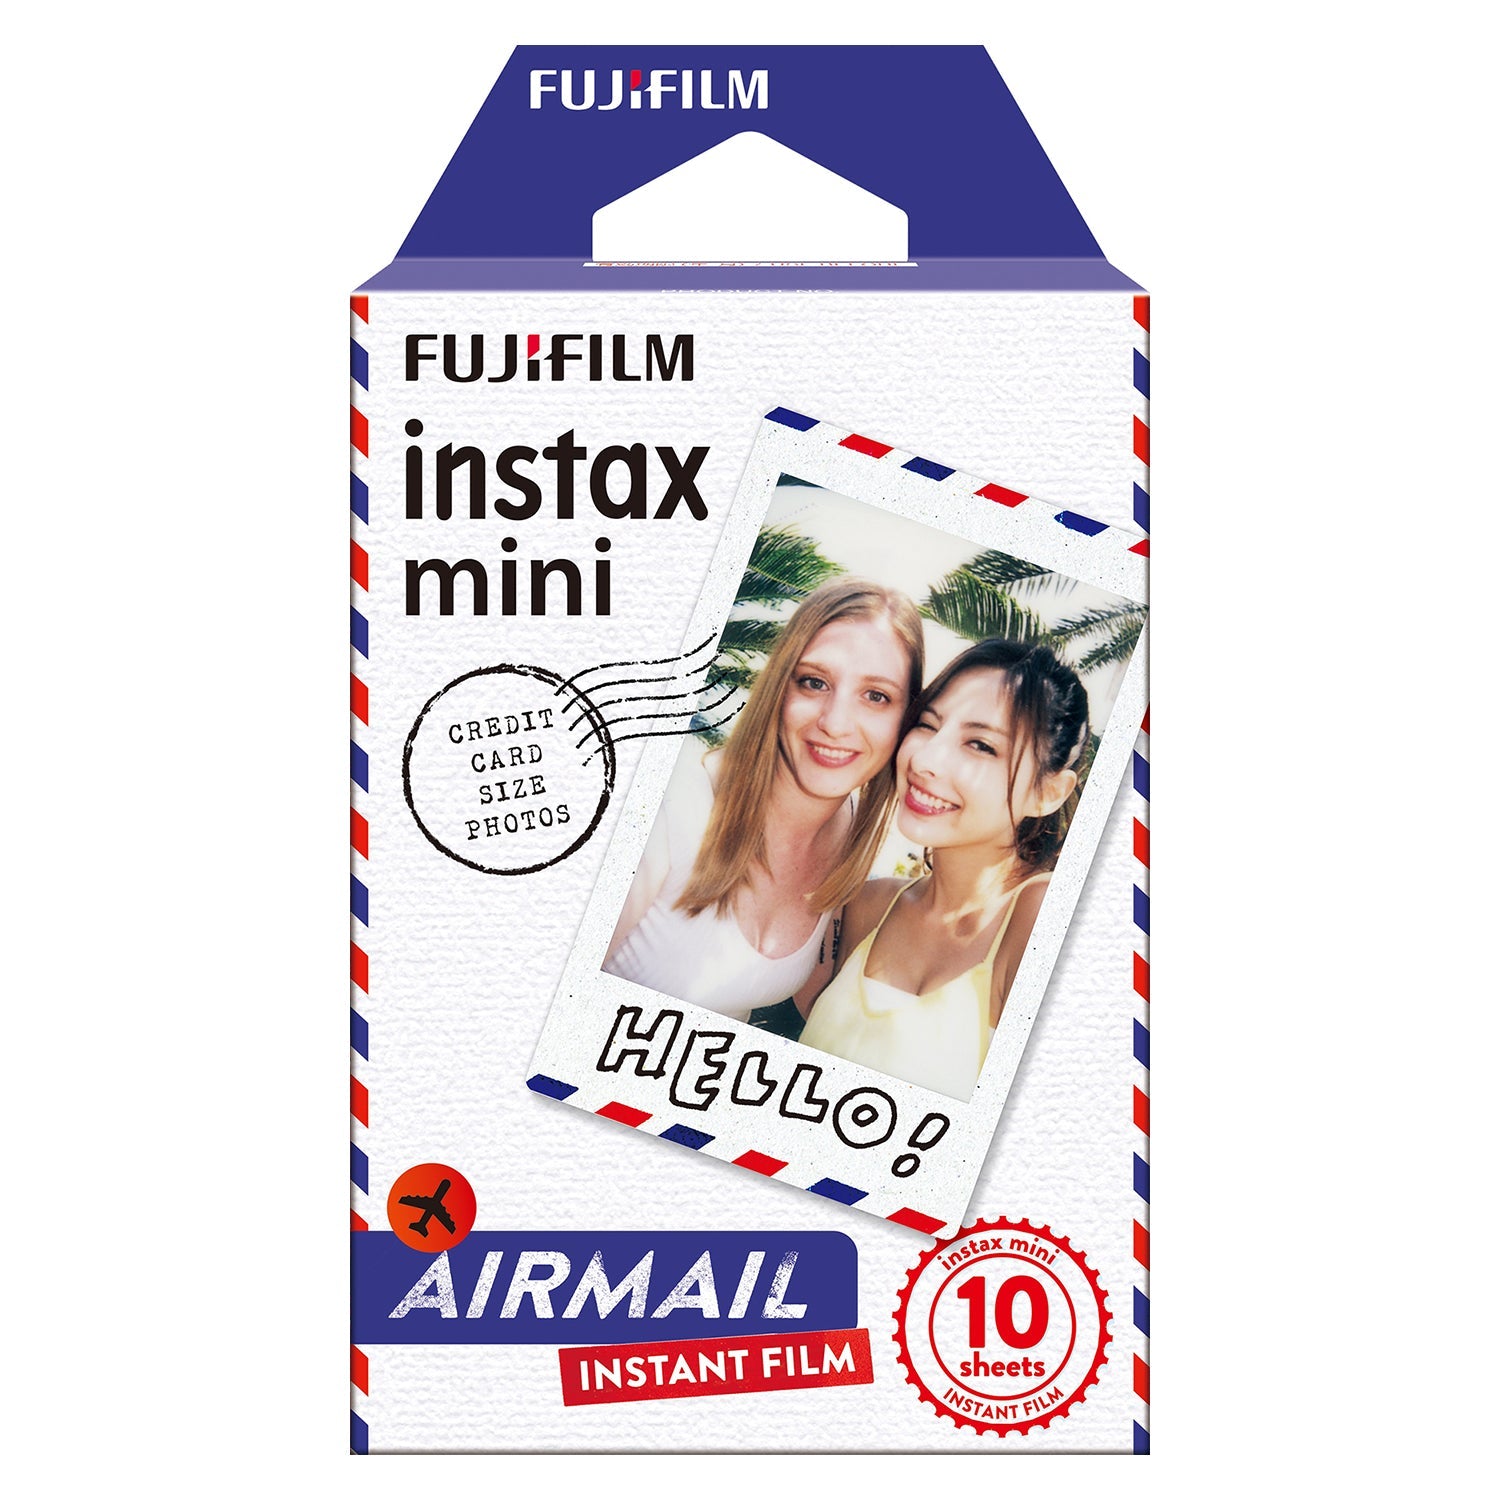 Fujifilm Instax Mini 10X1 airmail Instant Film with Instax Time Photo Album 64 Sheets (Orange)